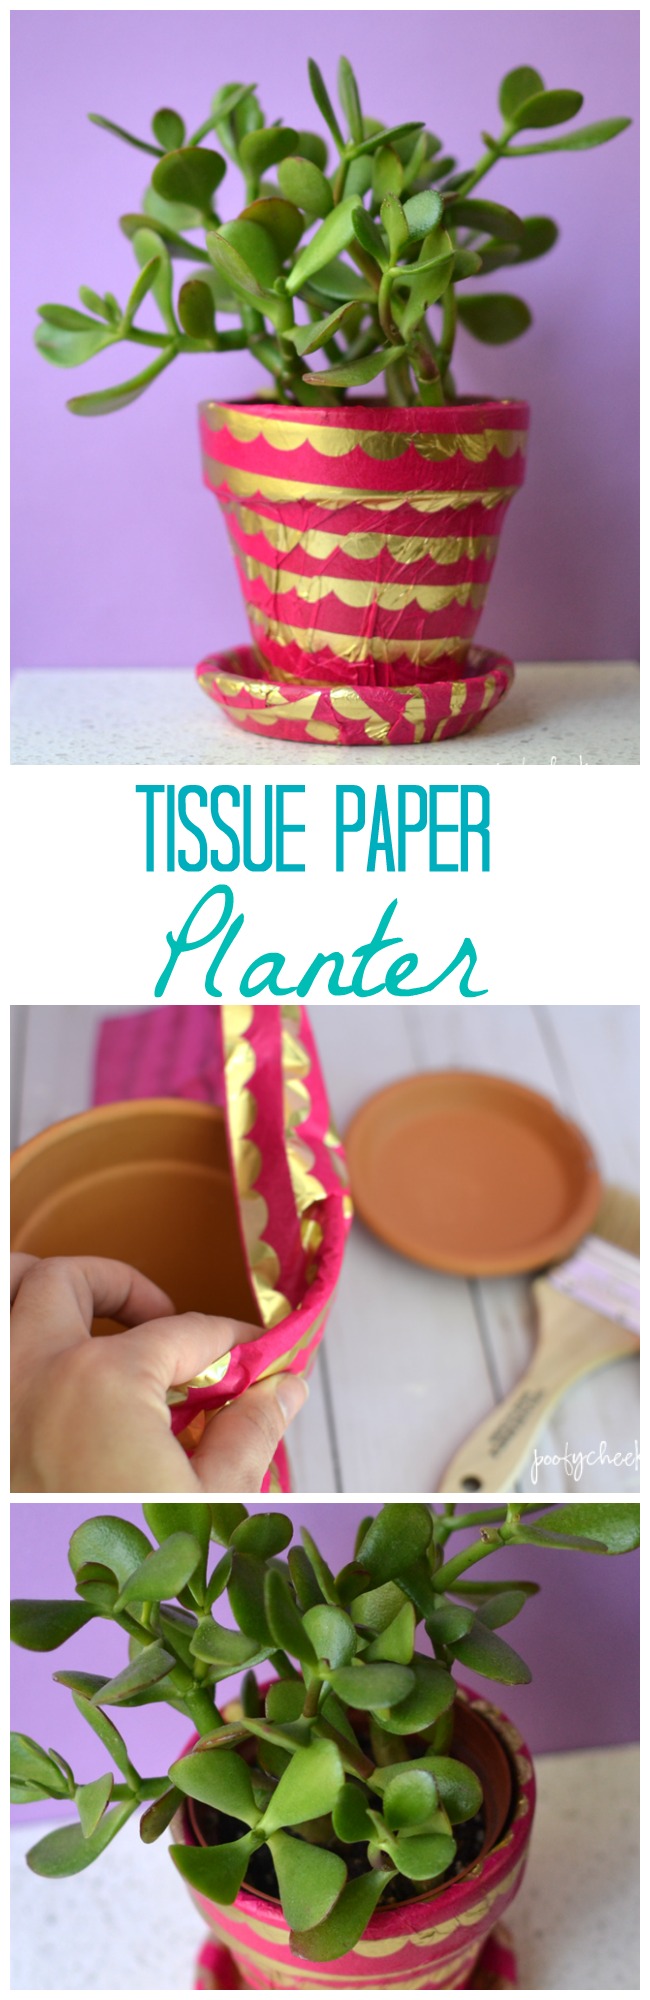 tissue paper planter